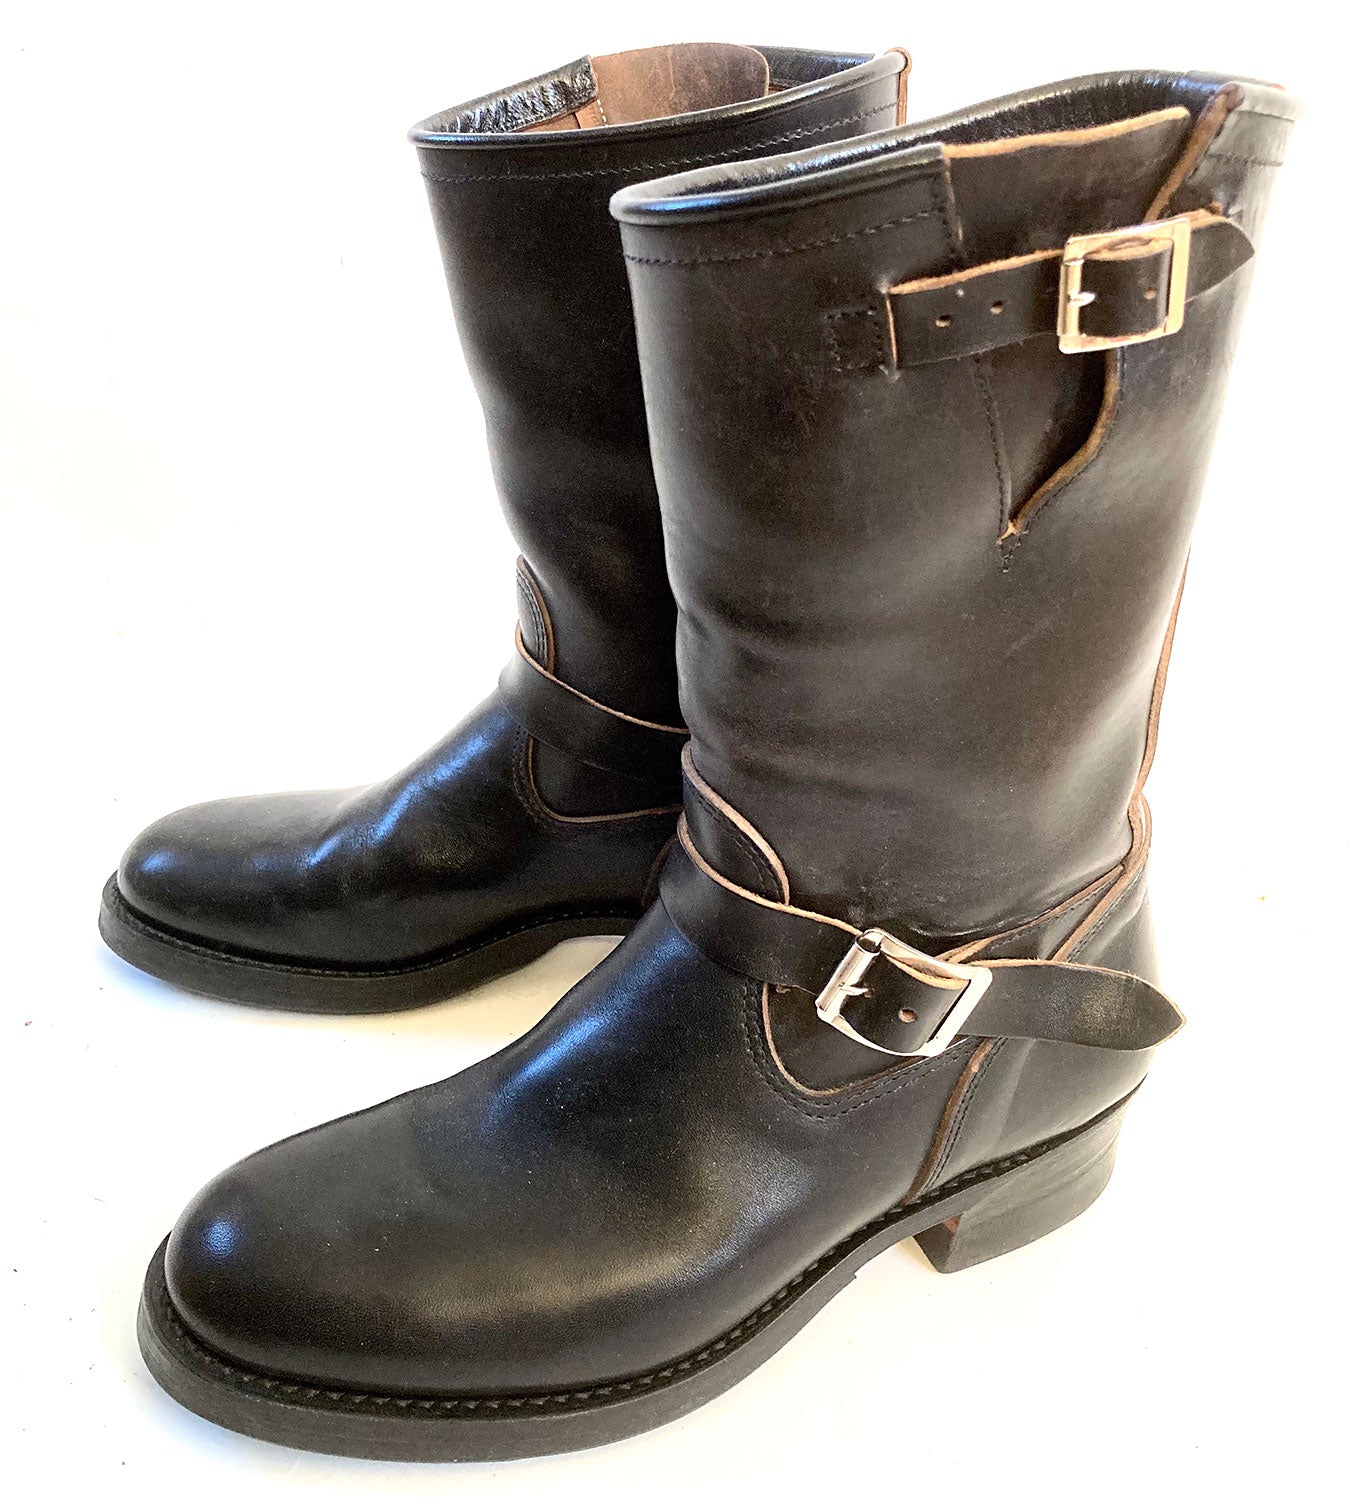 Attractions Biltbuck LOT 444 – Horsebutt engineer boots handmade in Japan, UK 8/US 9